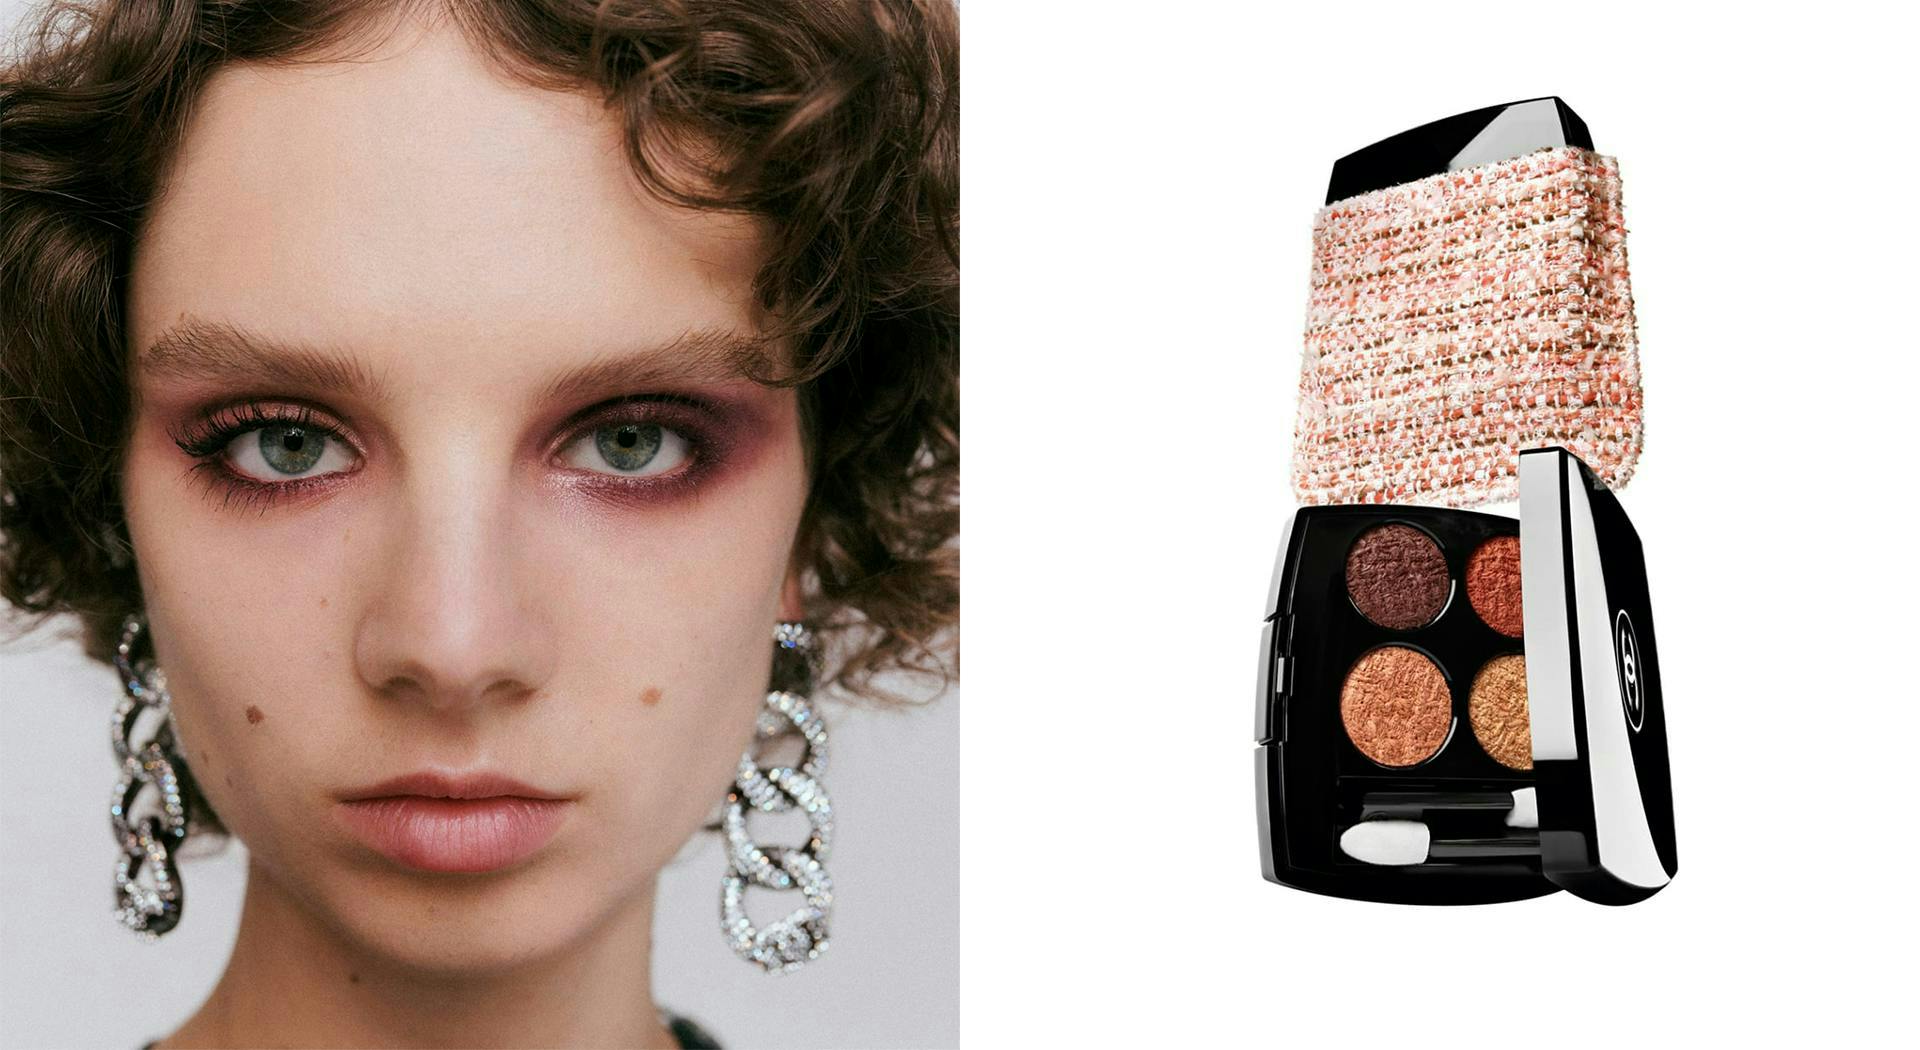 person human purse accessories bag handbag accessory cosmetics